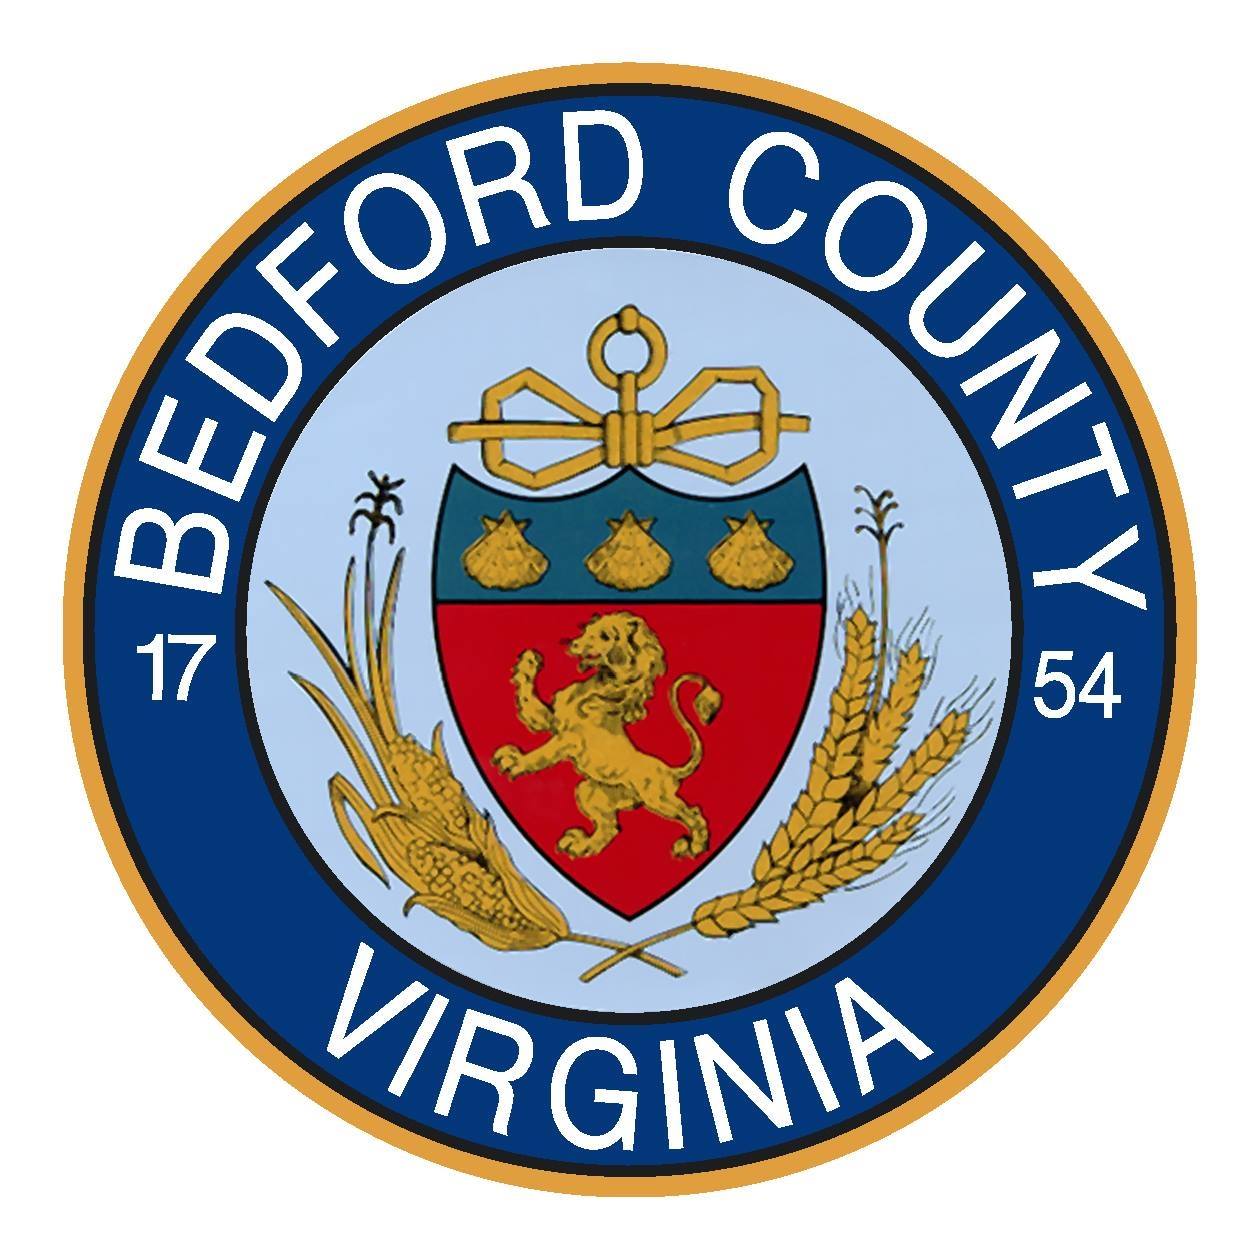 Bedford County Office of Economic Development